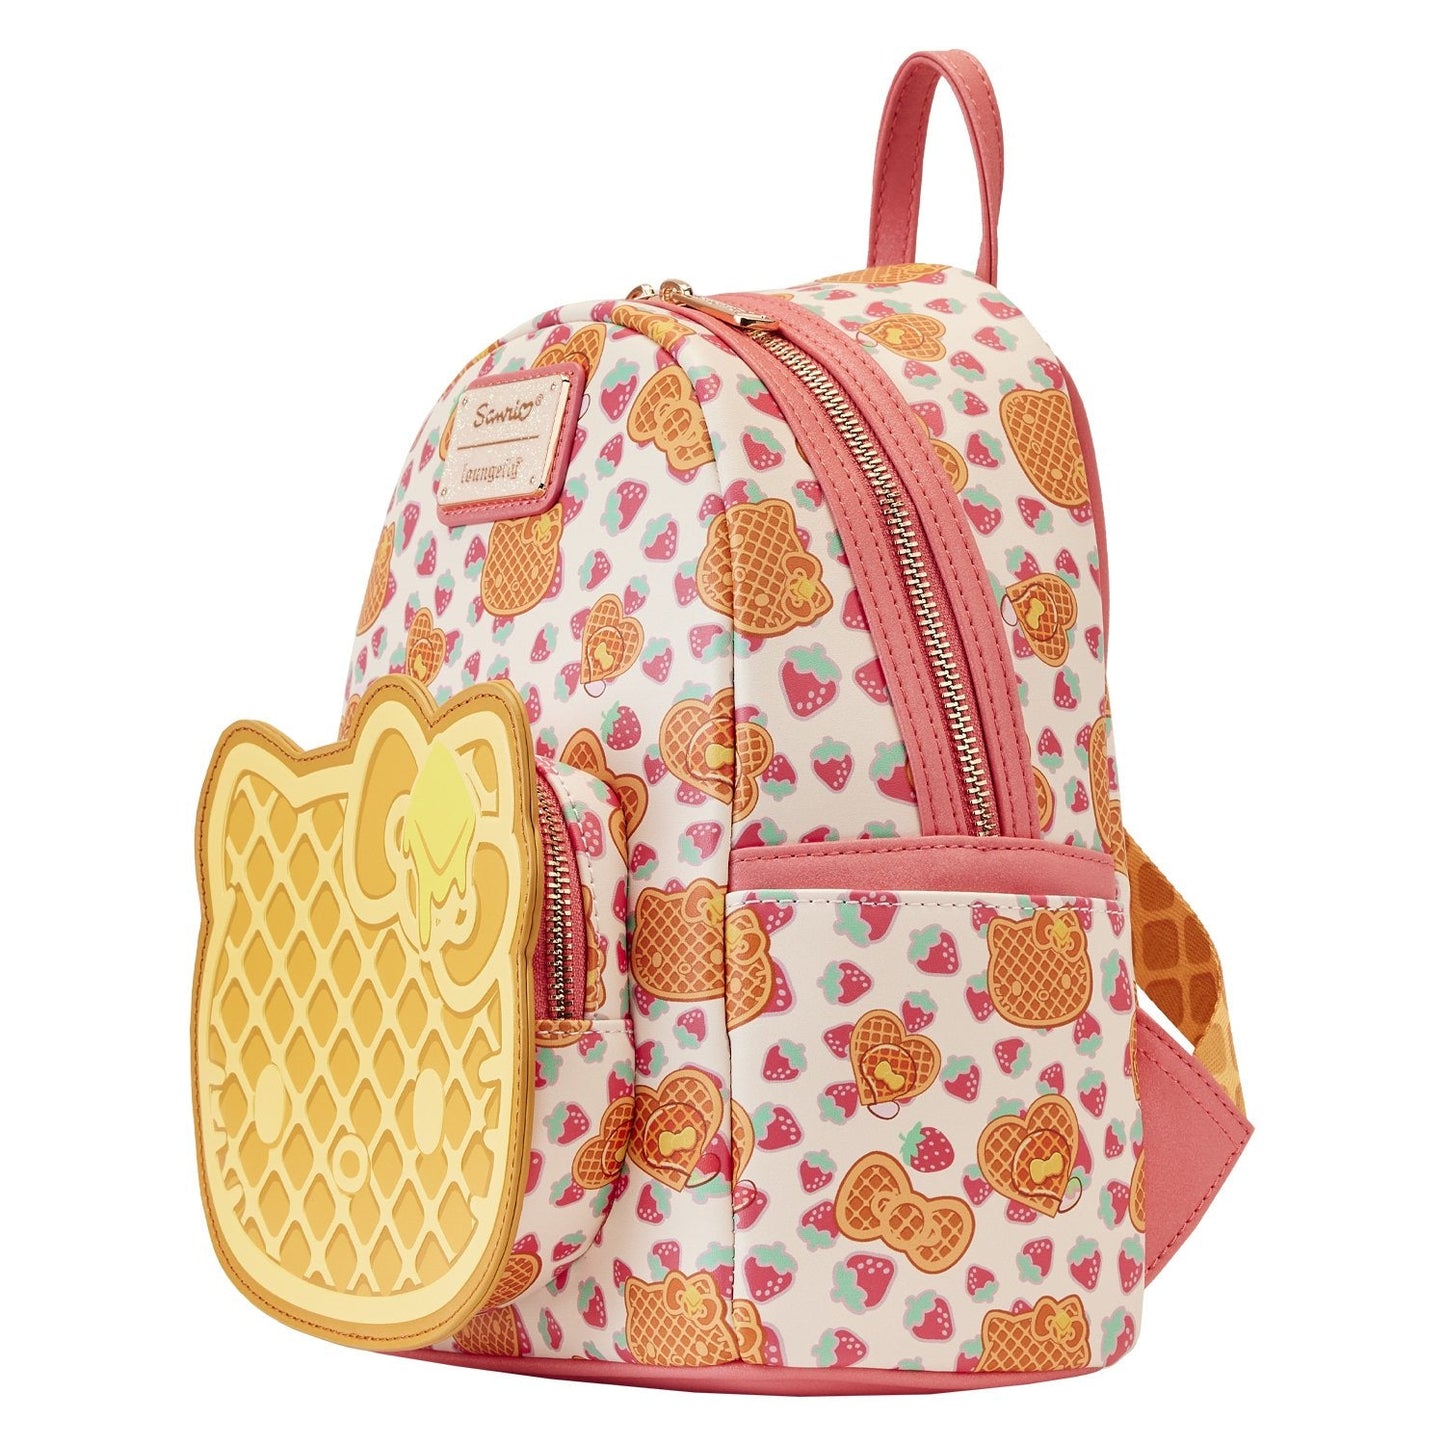 Hello Kitty Breakfast Waffle mini backpack